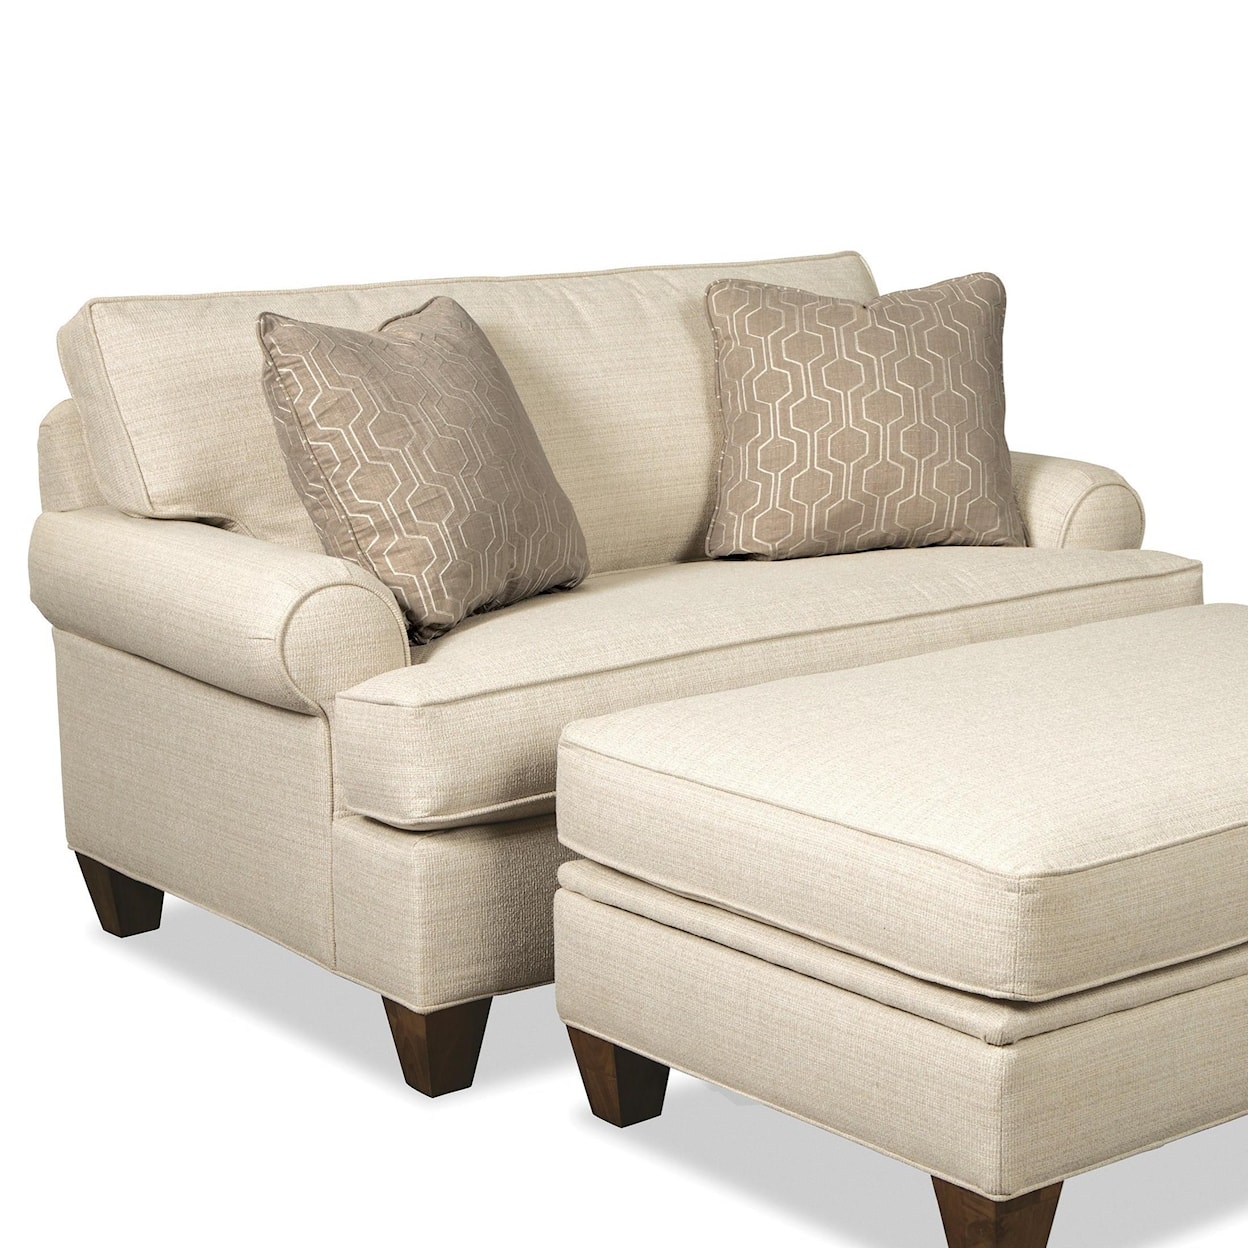 Hickorycraft C9 Custom Collection Twin Size Chair Sleeper